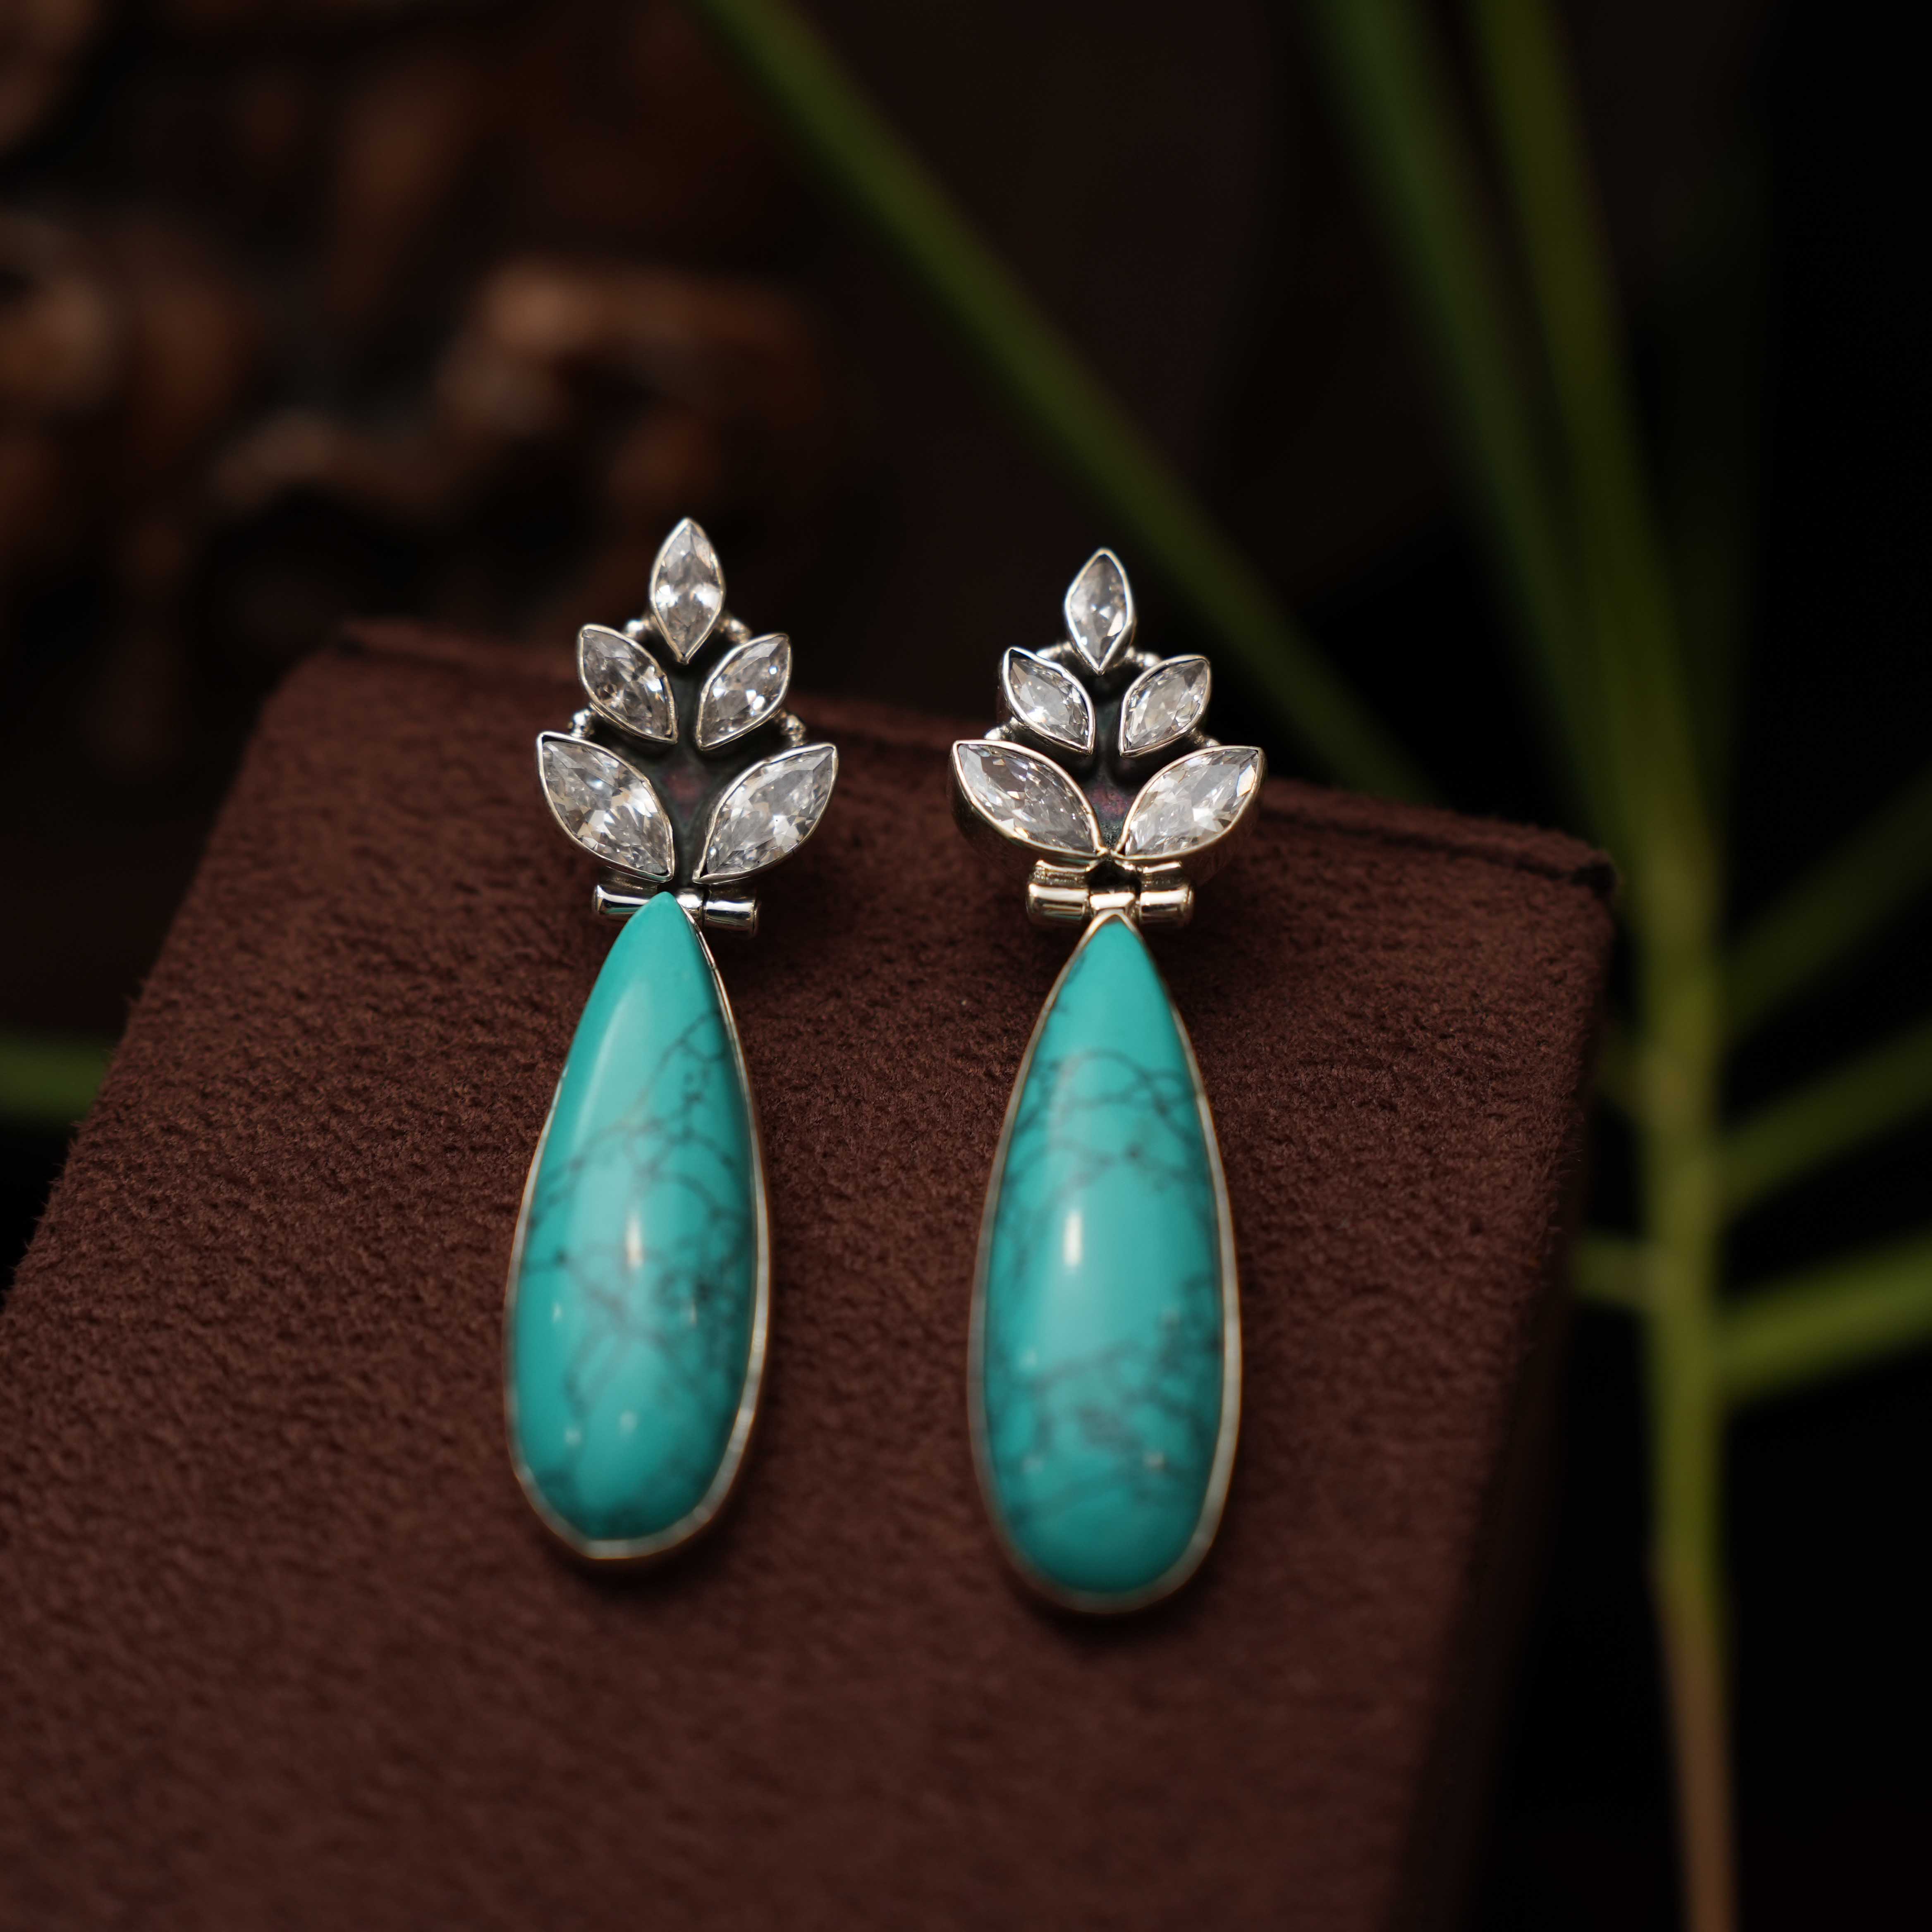 Kezia Oxidized Silver Earrings - Turquoise